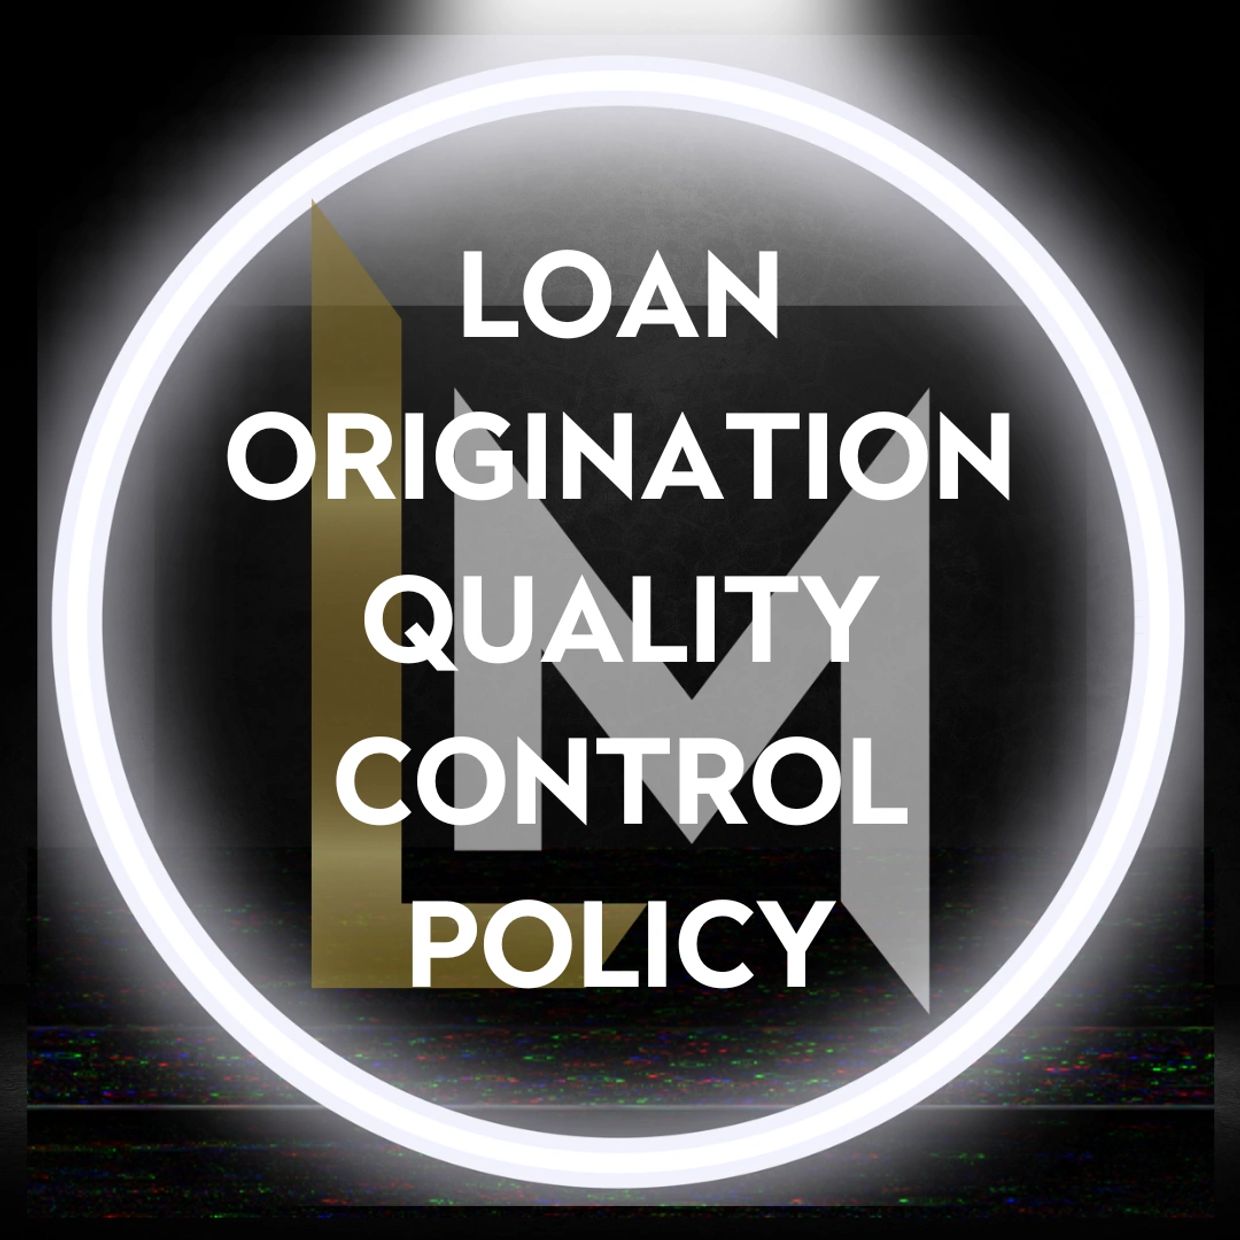 LOAN mortgage loans low rates va loan veterans loan fixed rate best mortgage company tampa florida